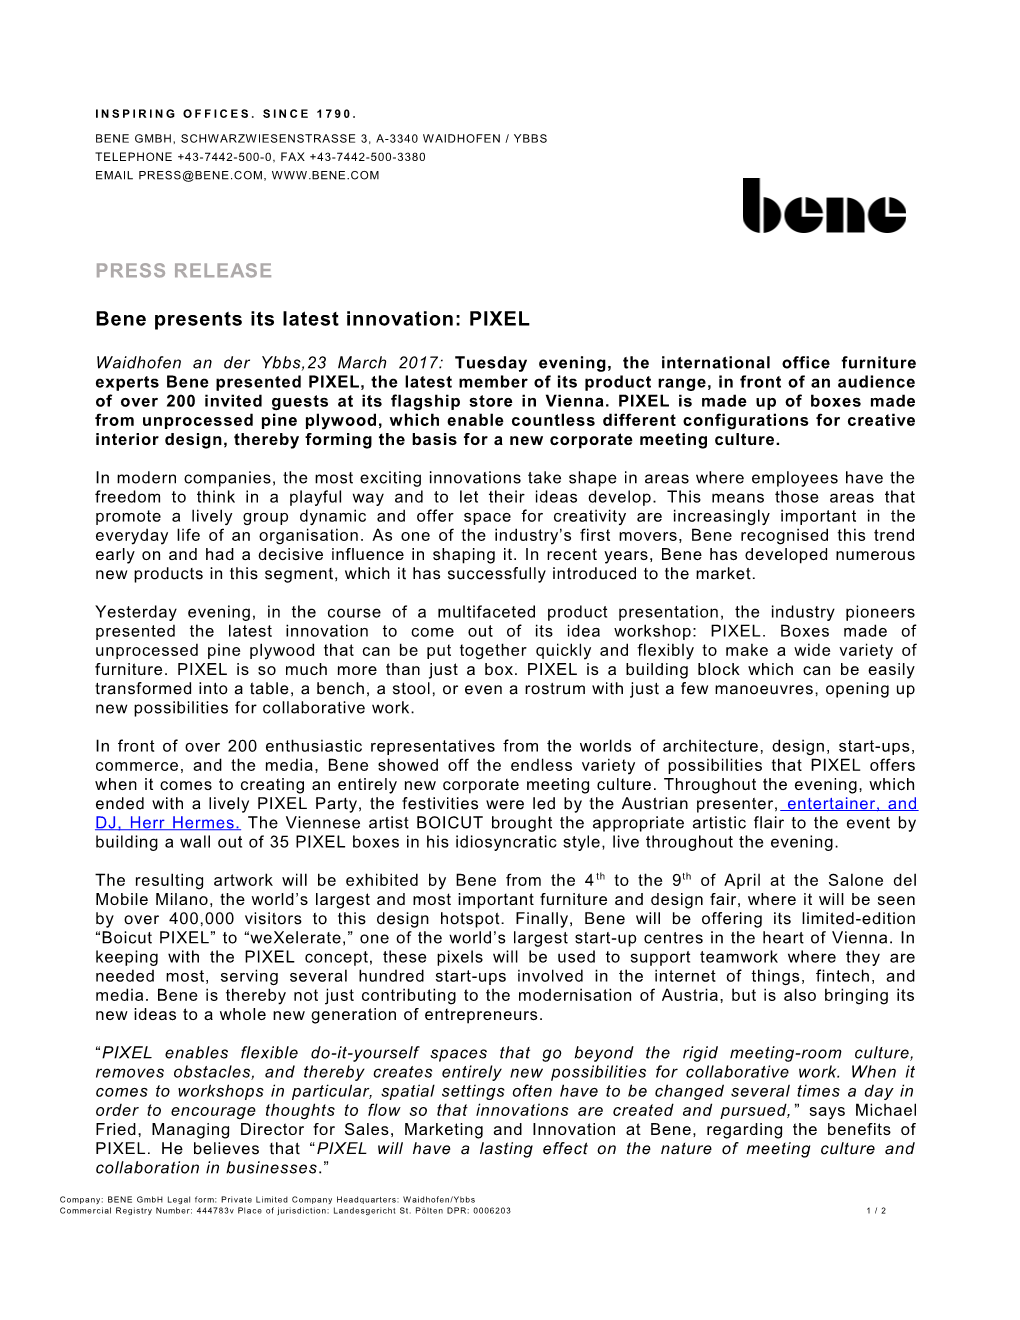 Bene Presents Its Latest Innovation: PIXEL